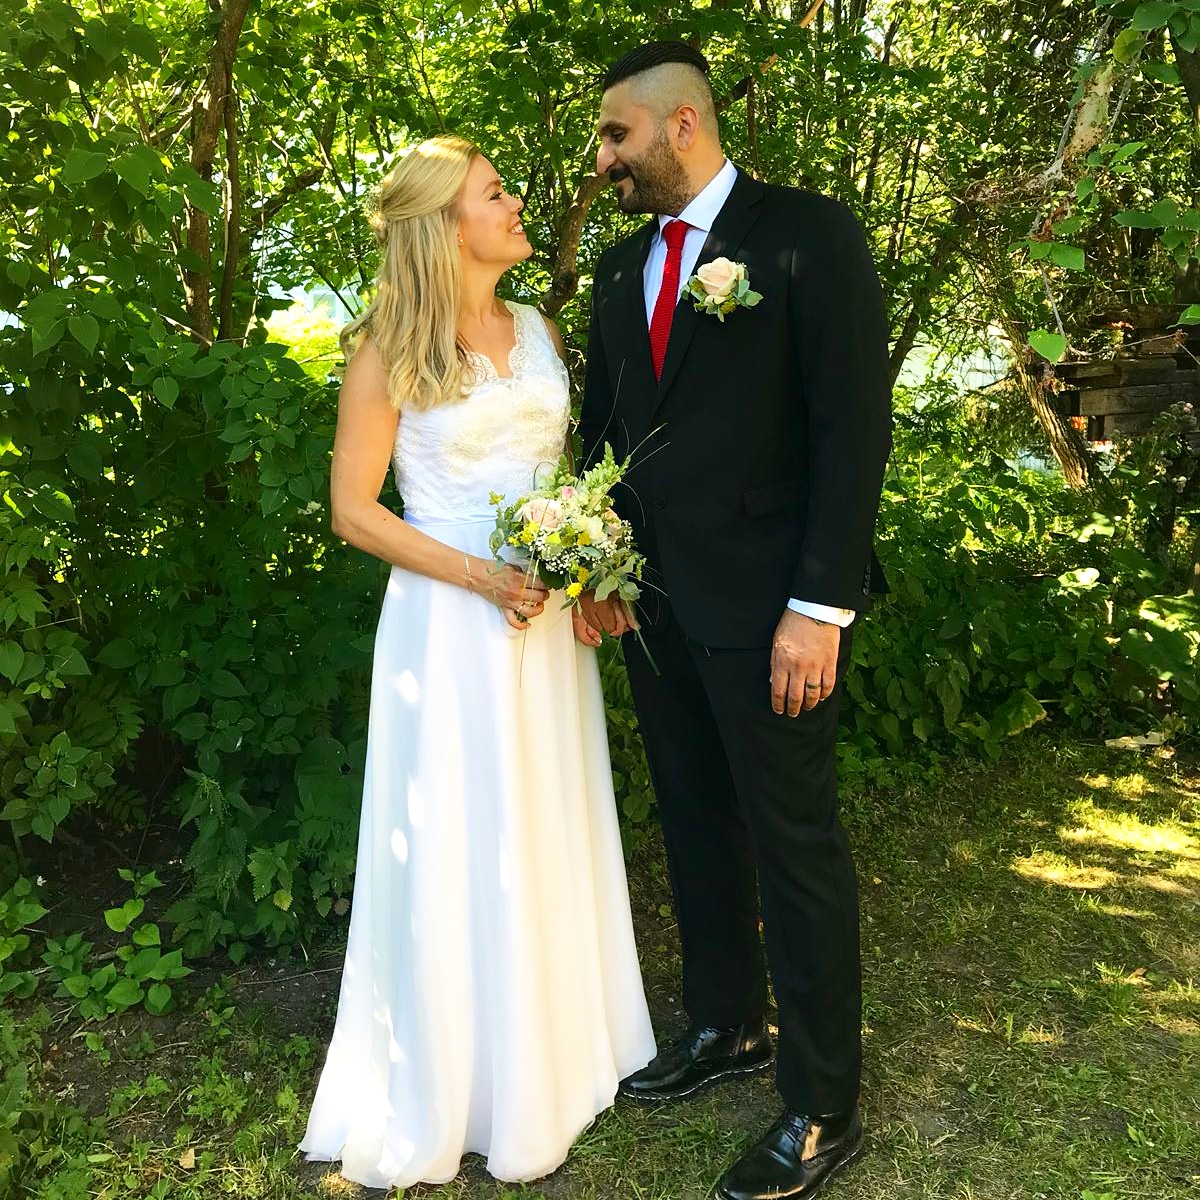 Wedded couple blonde woman in a wedding dress dark man in a suit